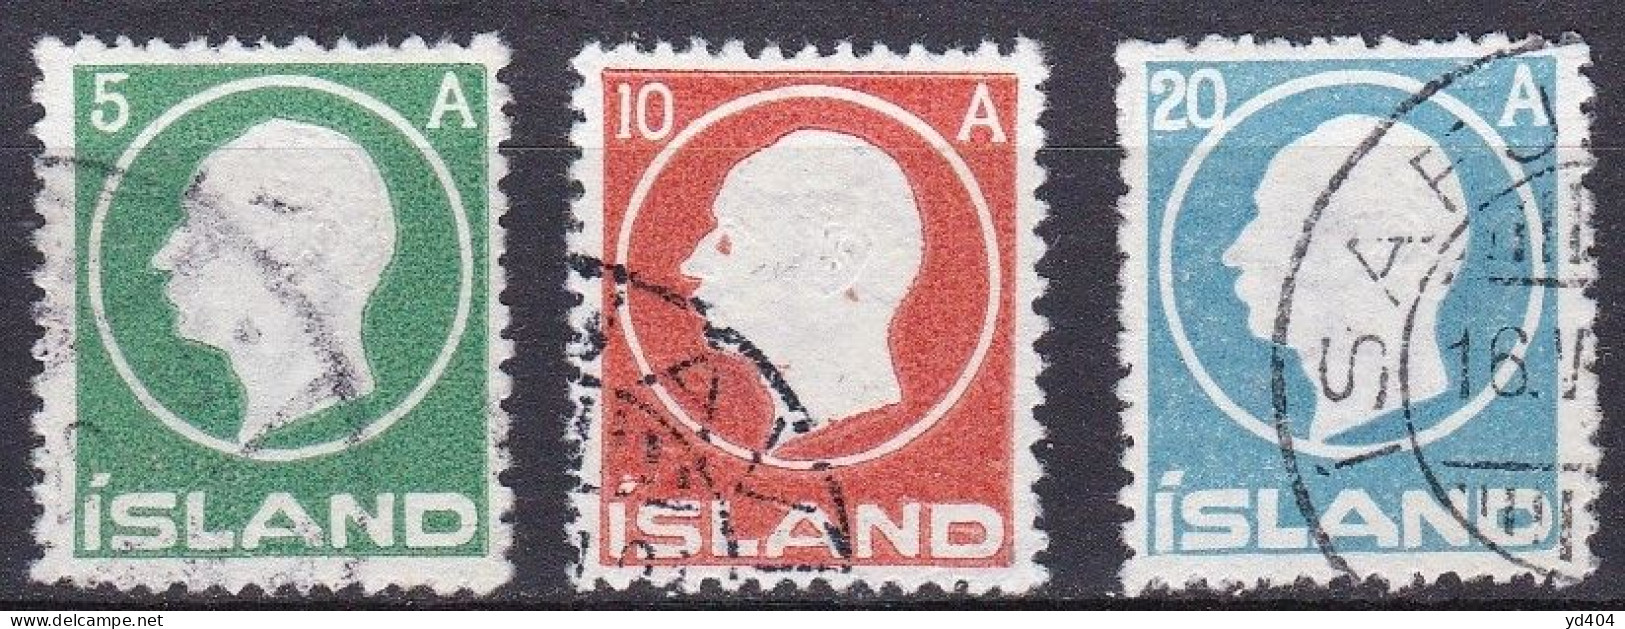 IS012F – ISLANDE – ICELAND – 1912 – KING FRDERIK VIII – SG # 102/4 USED 46 € - Gebruikt